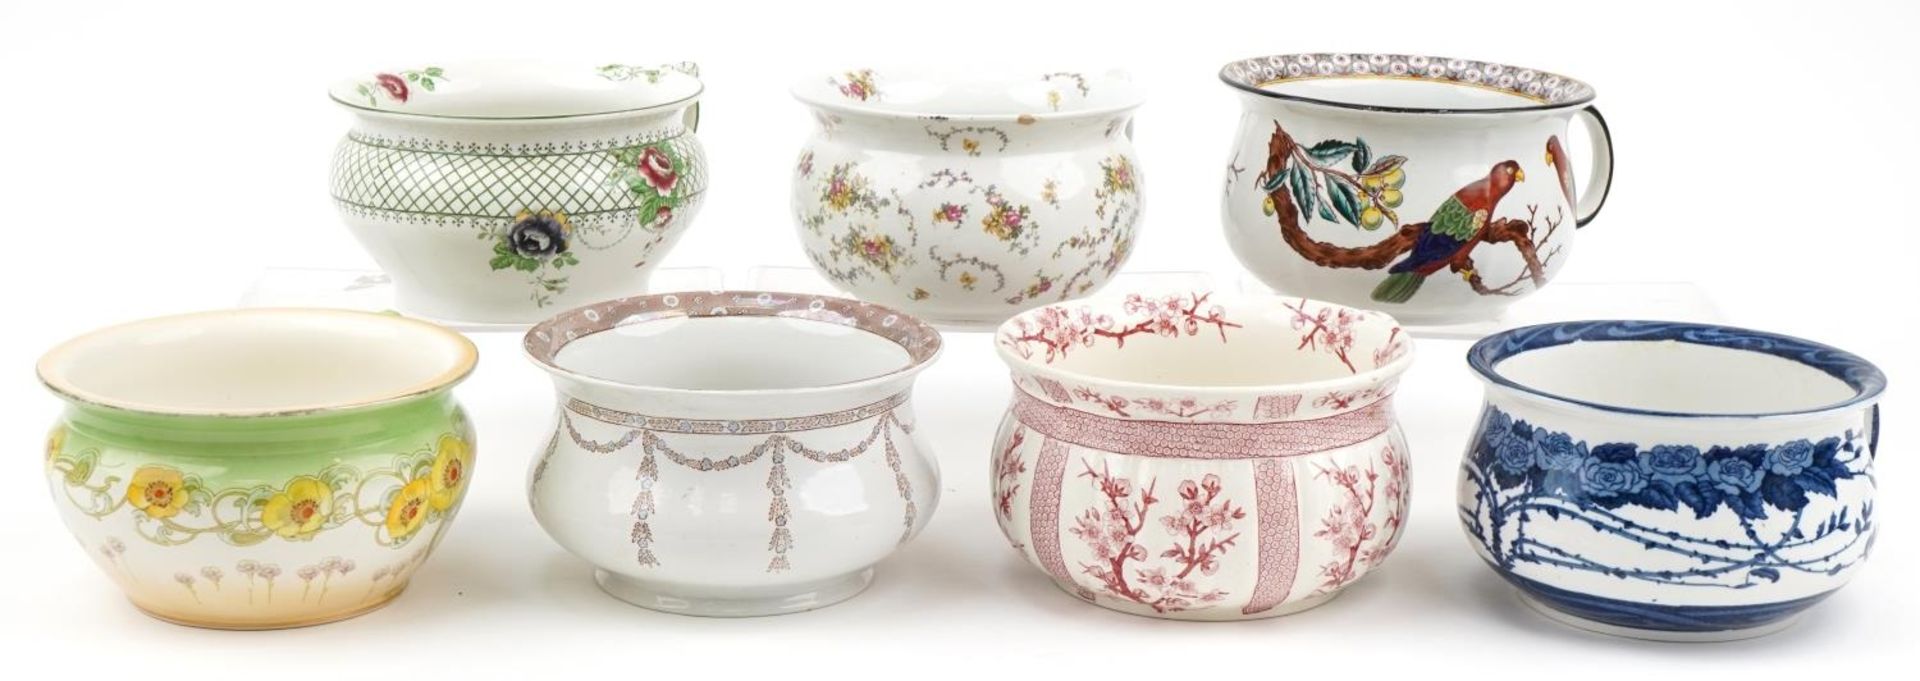 Seven Victorian chamber pots including Ridgeways Cherry, Crescent, Adderleys Keen-Lung, Booths and S